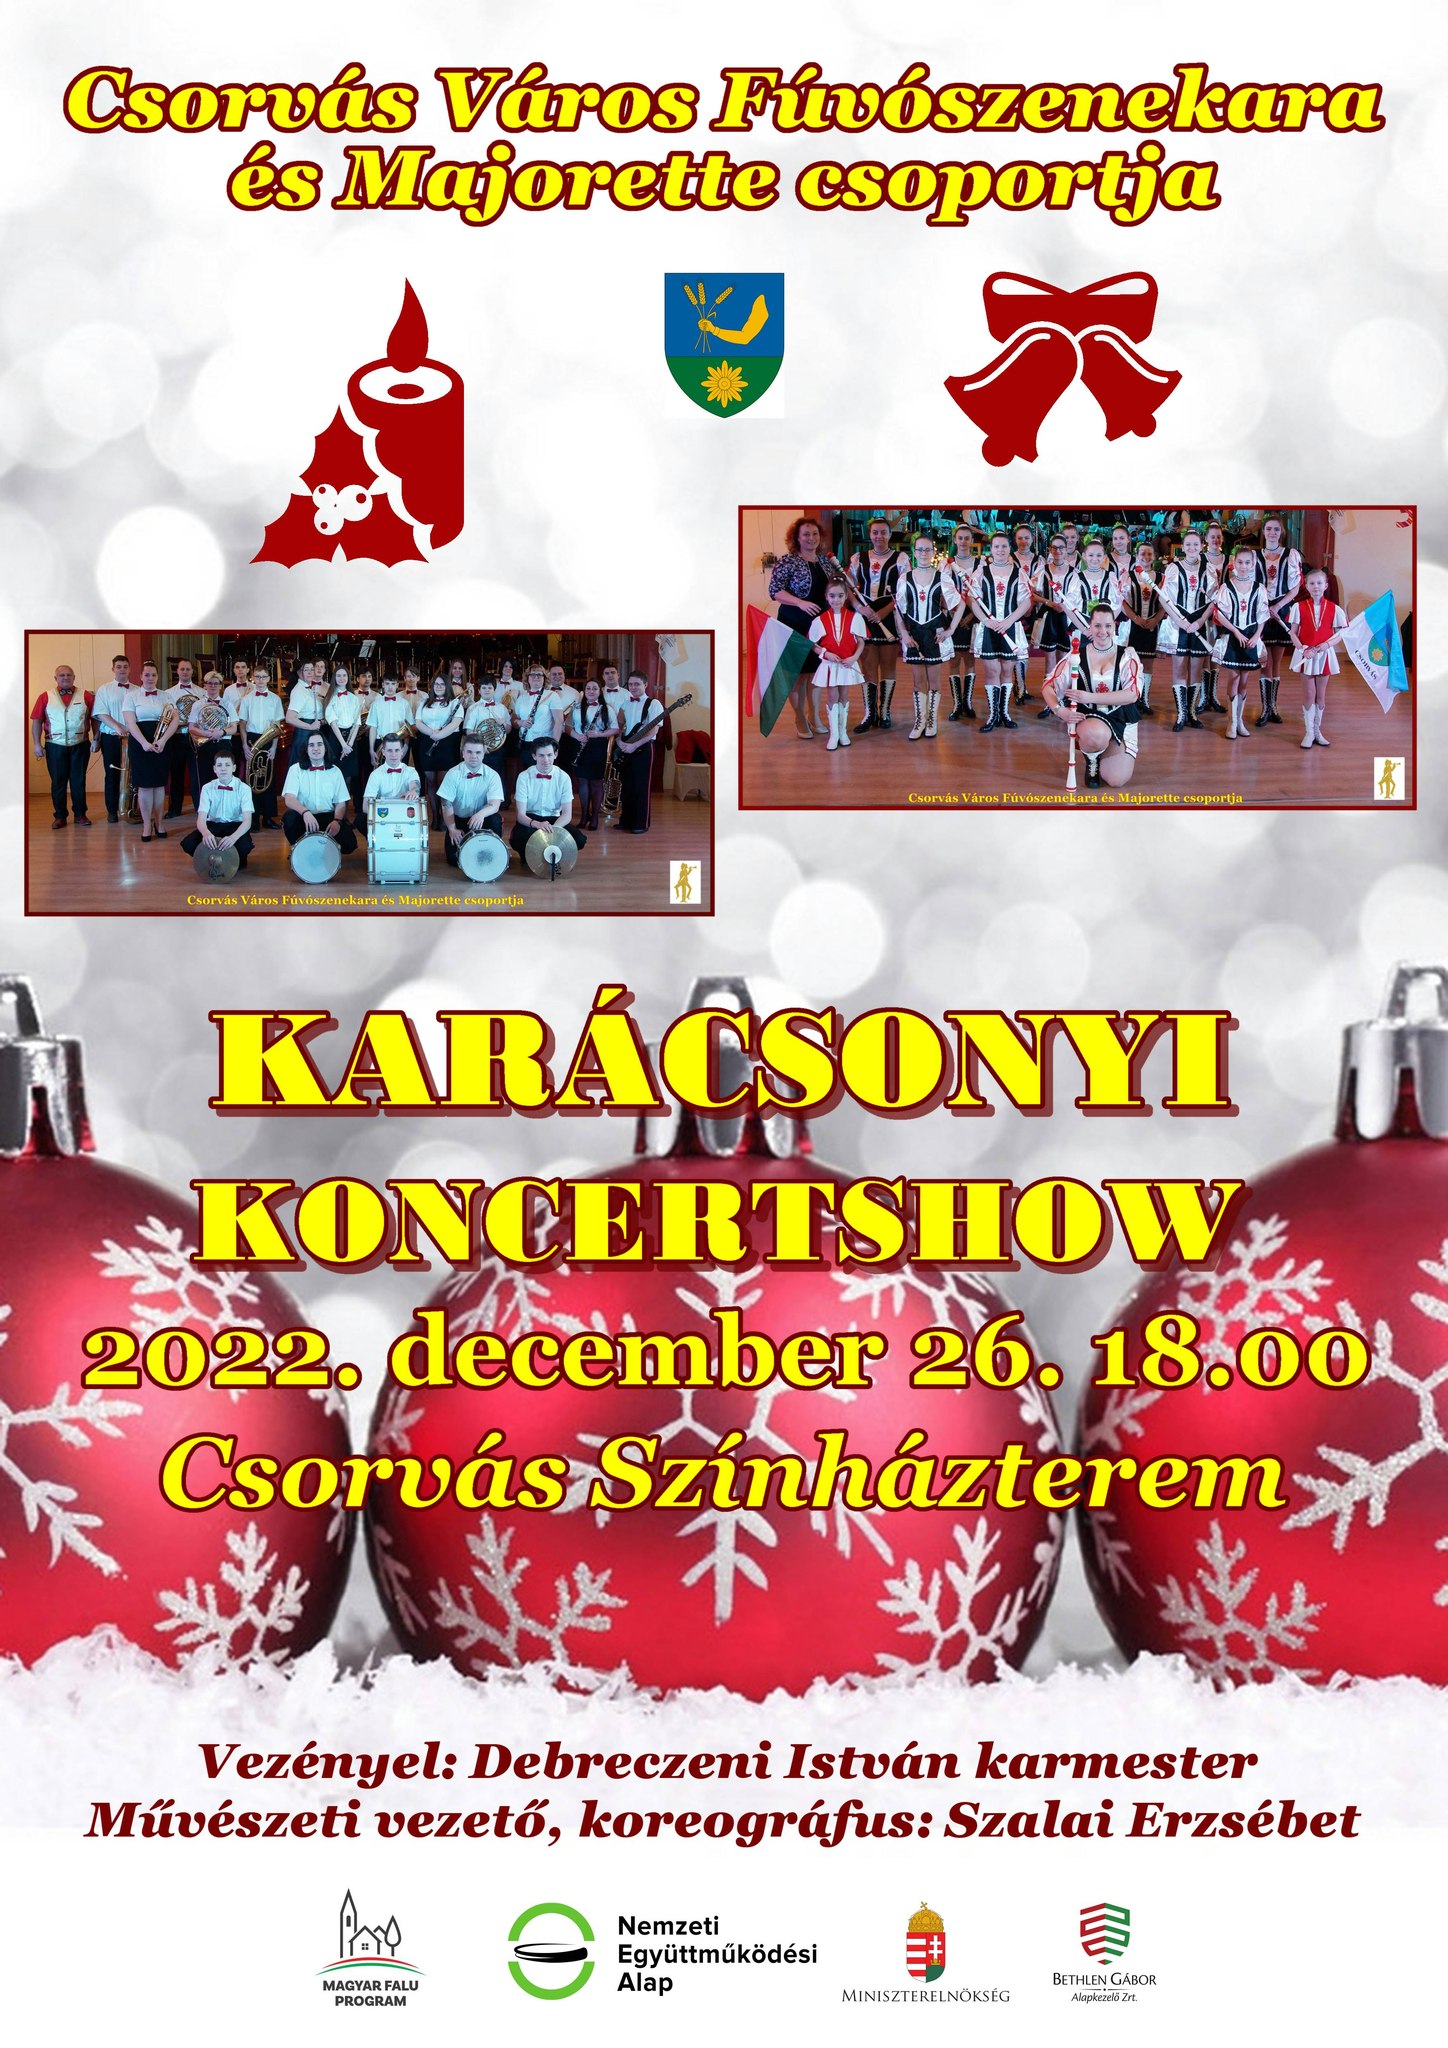 Karacsonyi Koncert 2022 December 26